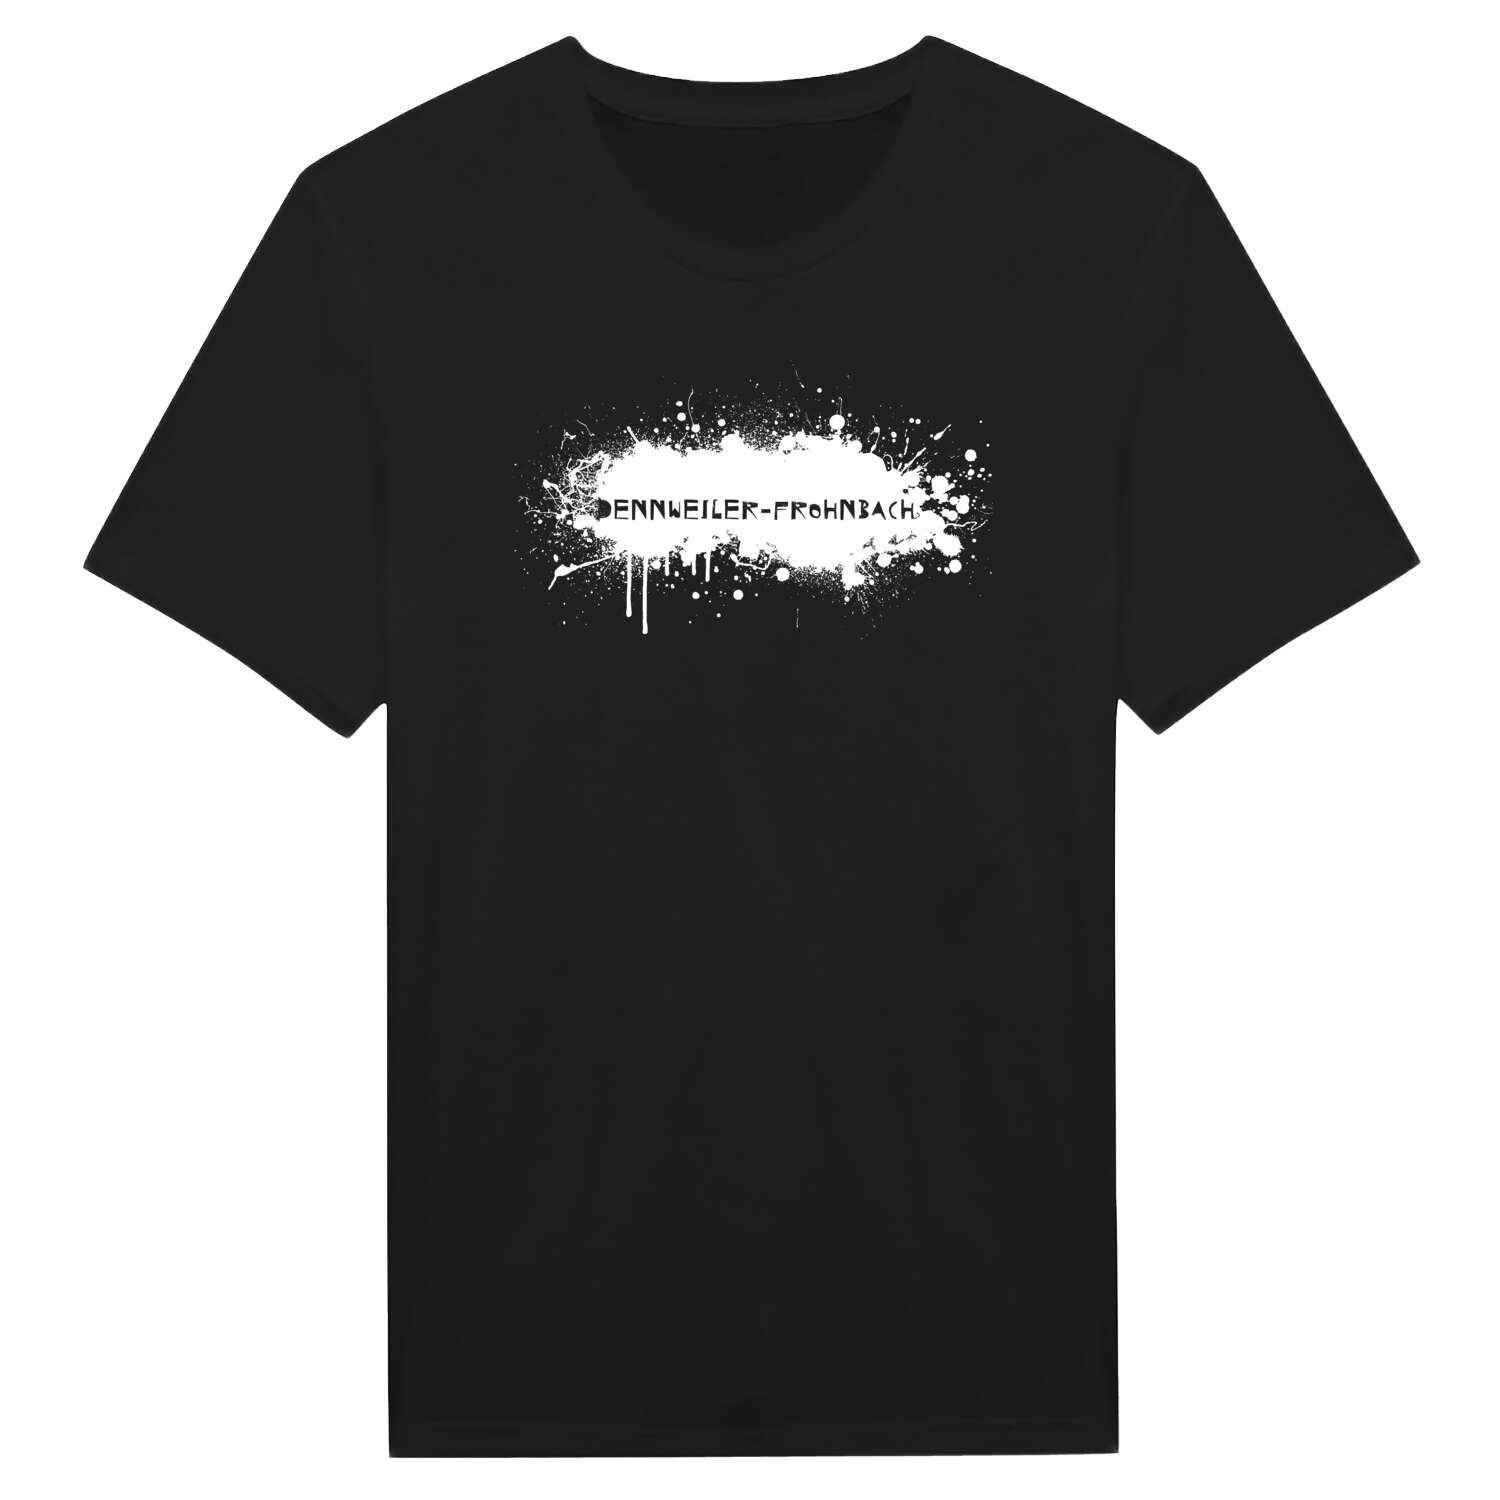 Dennweiler-Frohnbach T-Shirt »Paint Splash Punk«